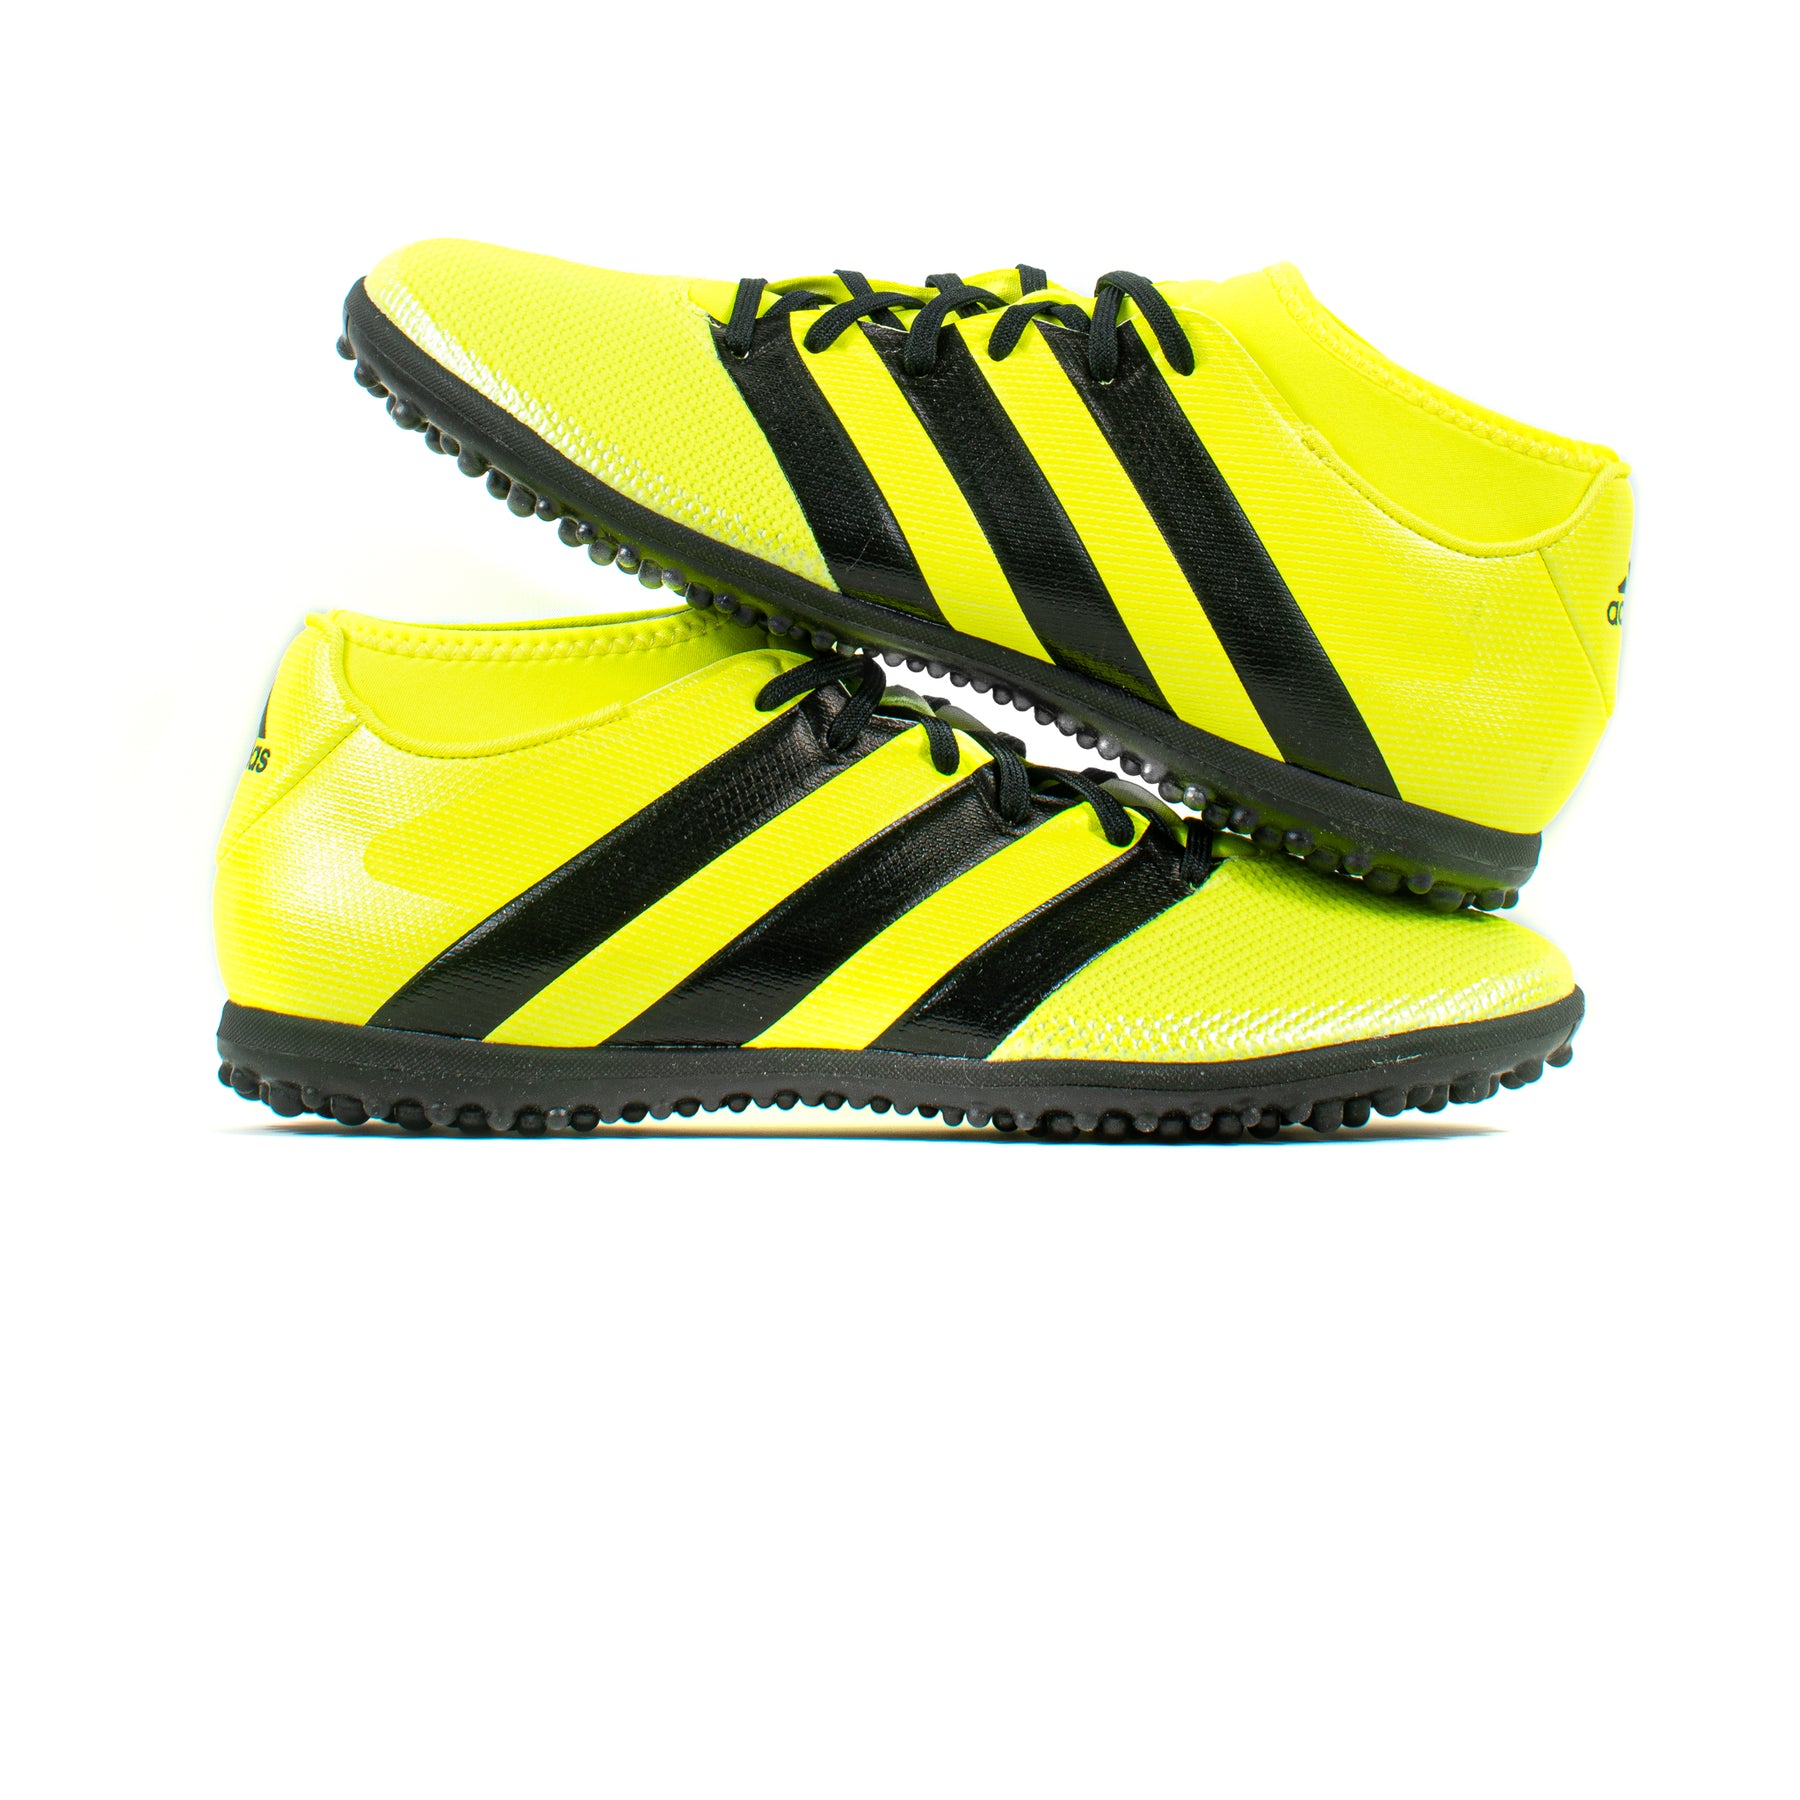 Adidas Ace 16.3 Yellow – Soccer